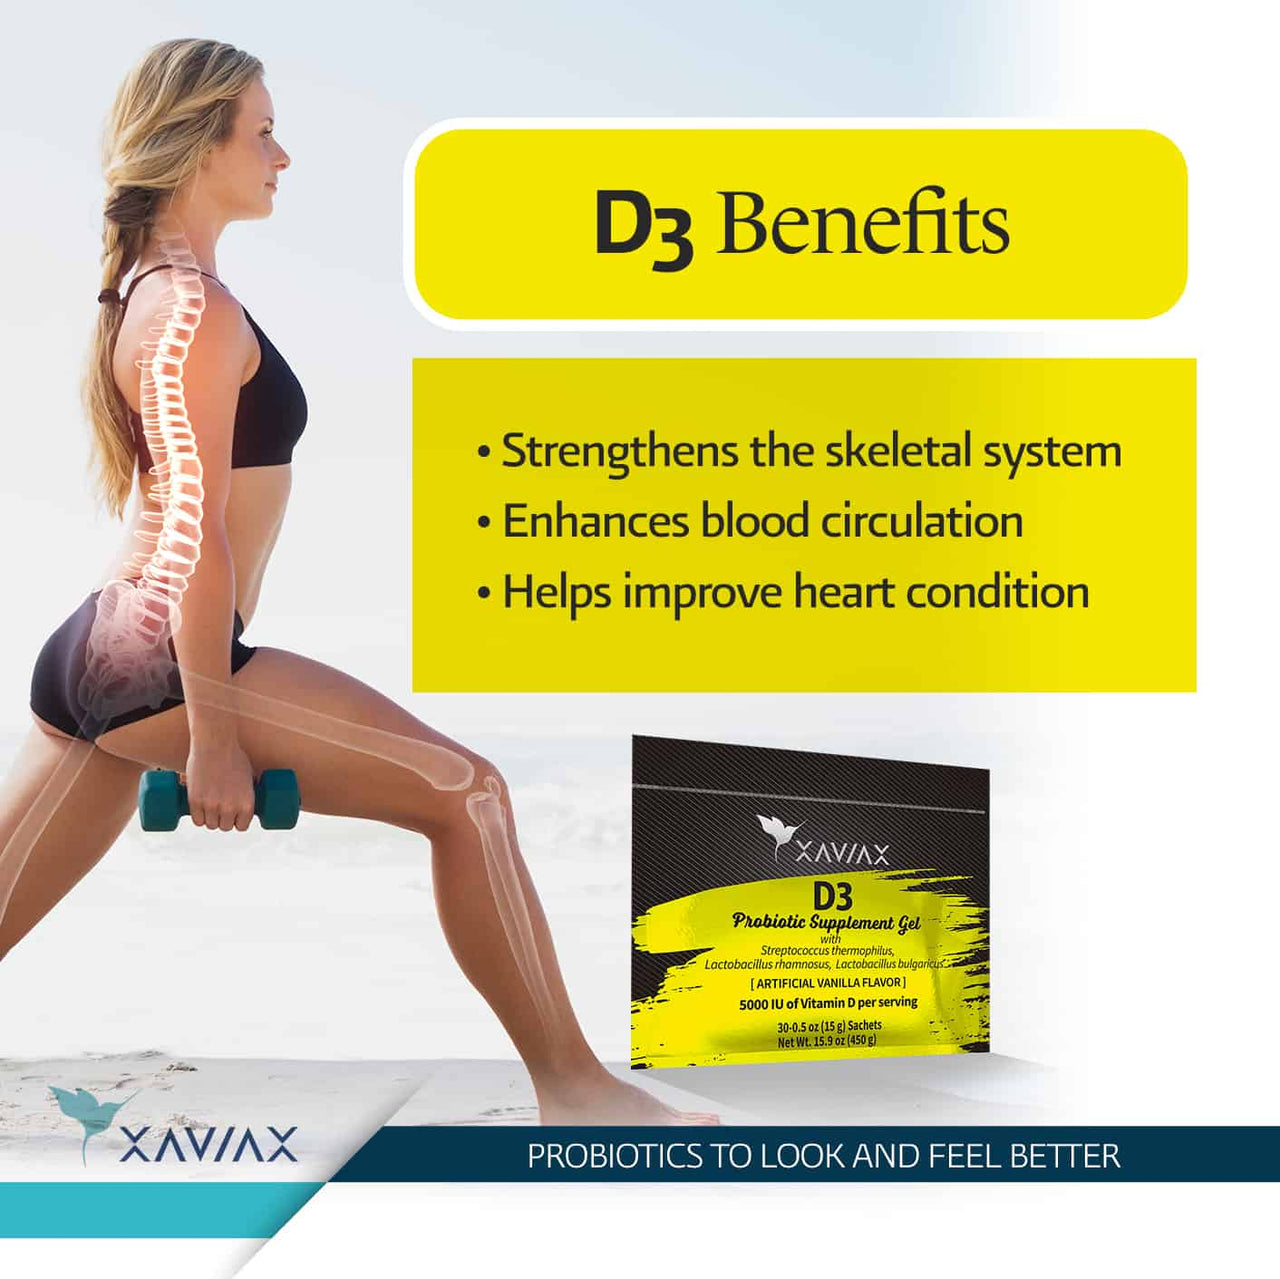 vitamin d3 benefits helps improve heart condition